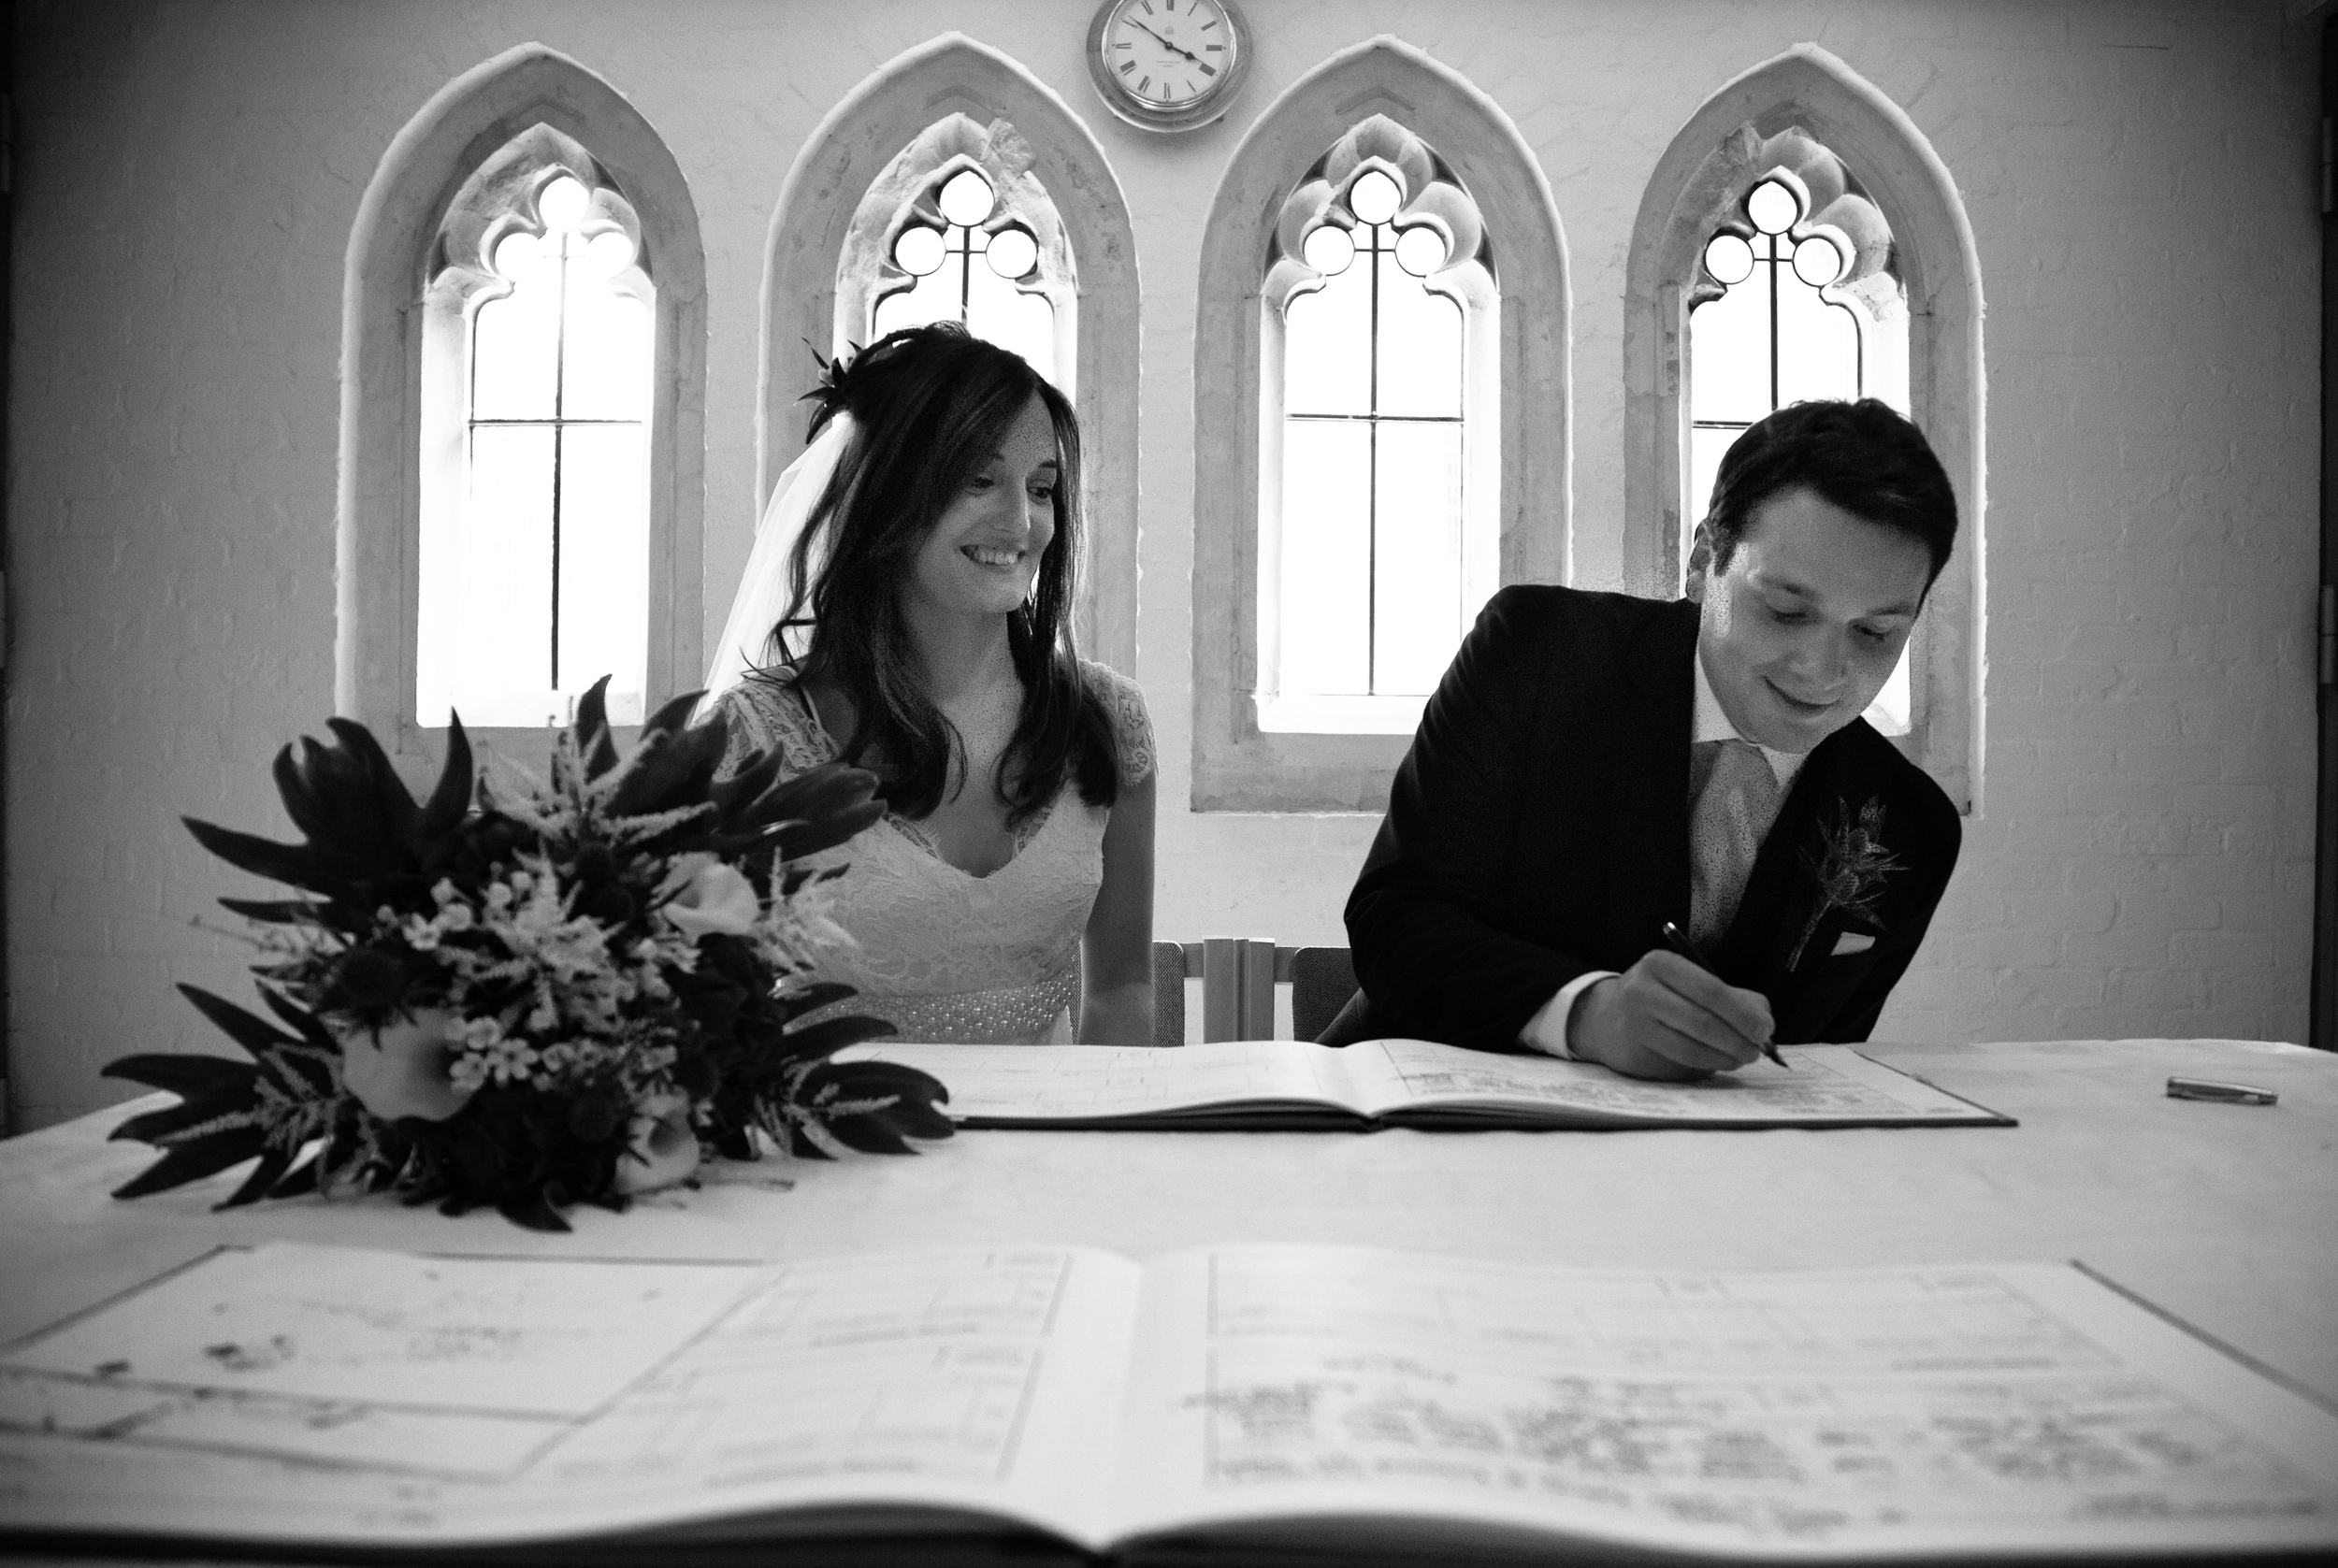 st-mary's-church-barnes-signing-register-london-uk-destination-wedding-photography-Adam-Rowley